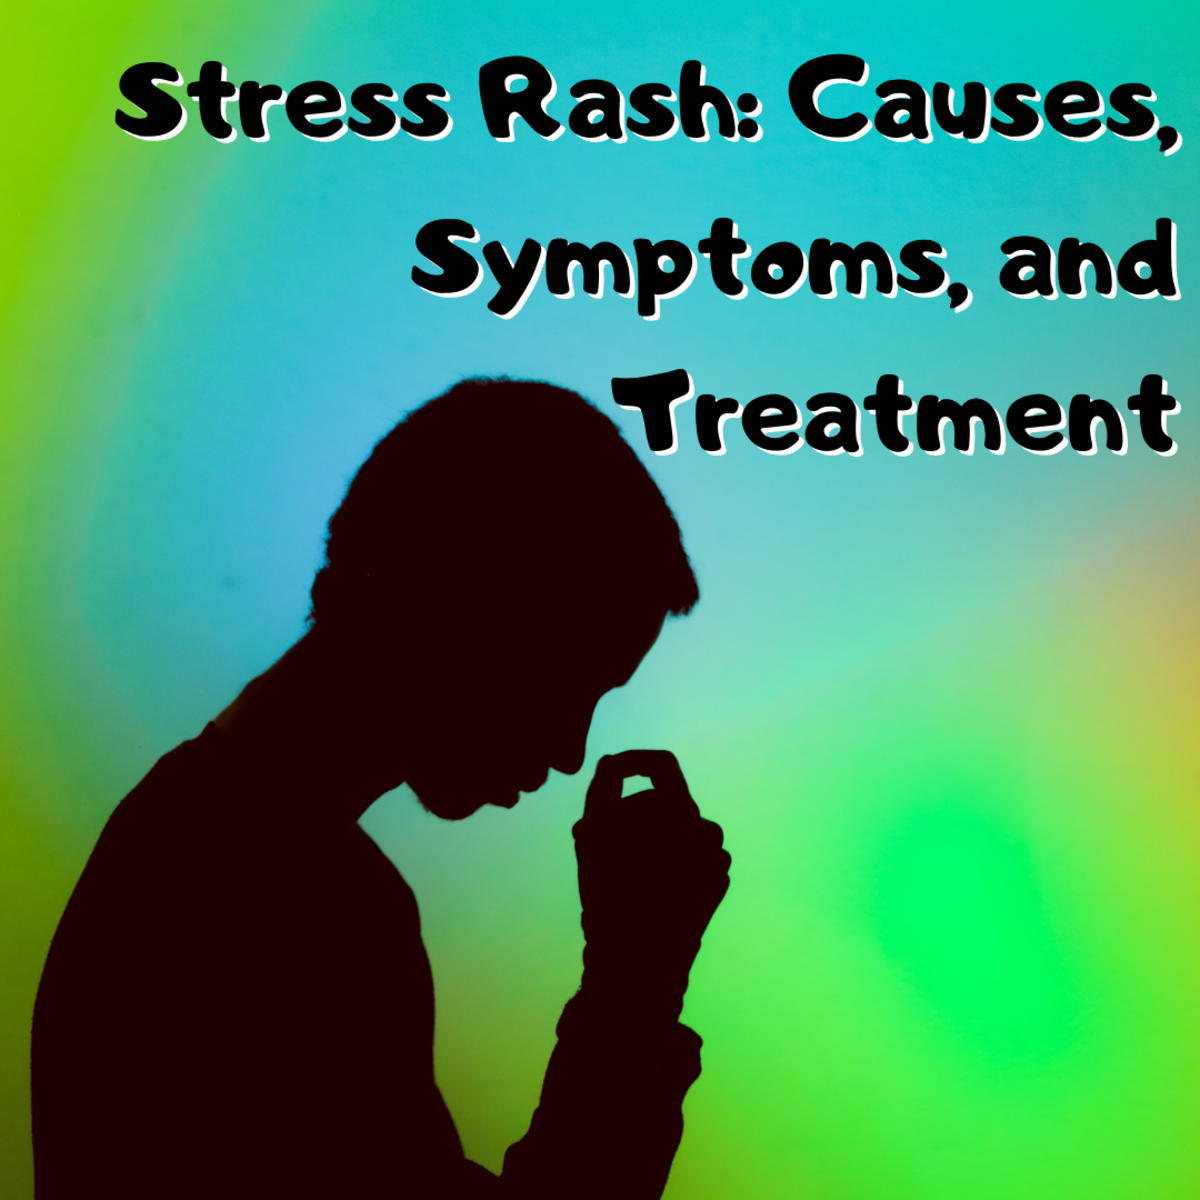 Stress Rash: Causes, Symptoms, and Treatment